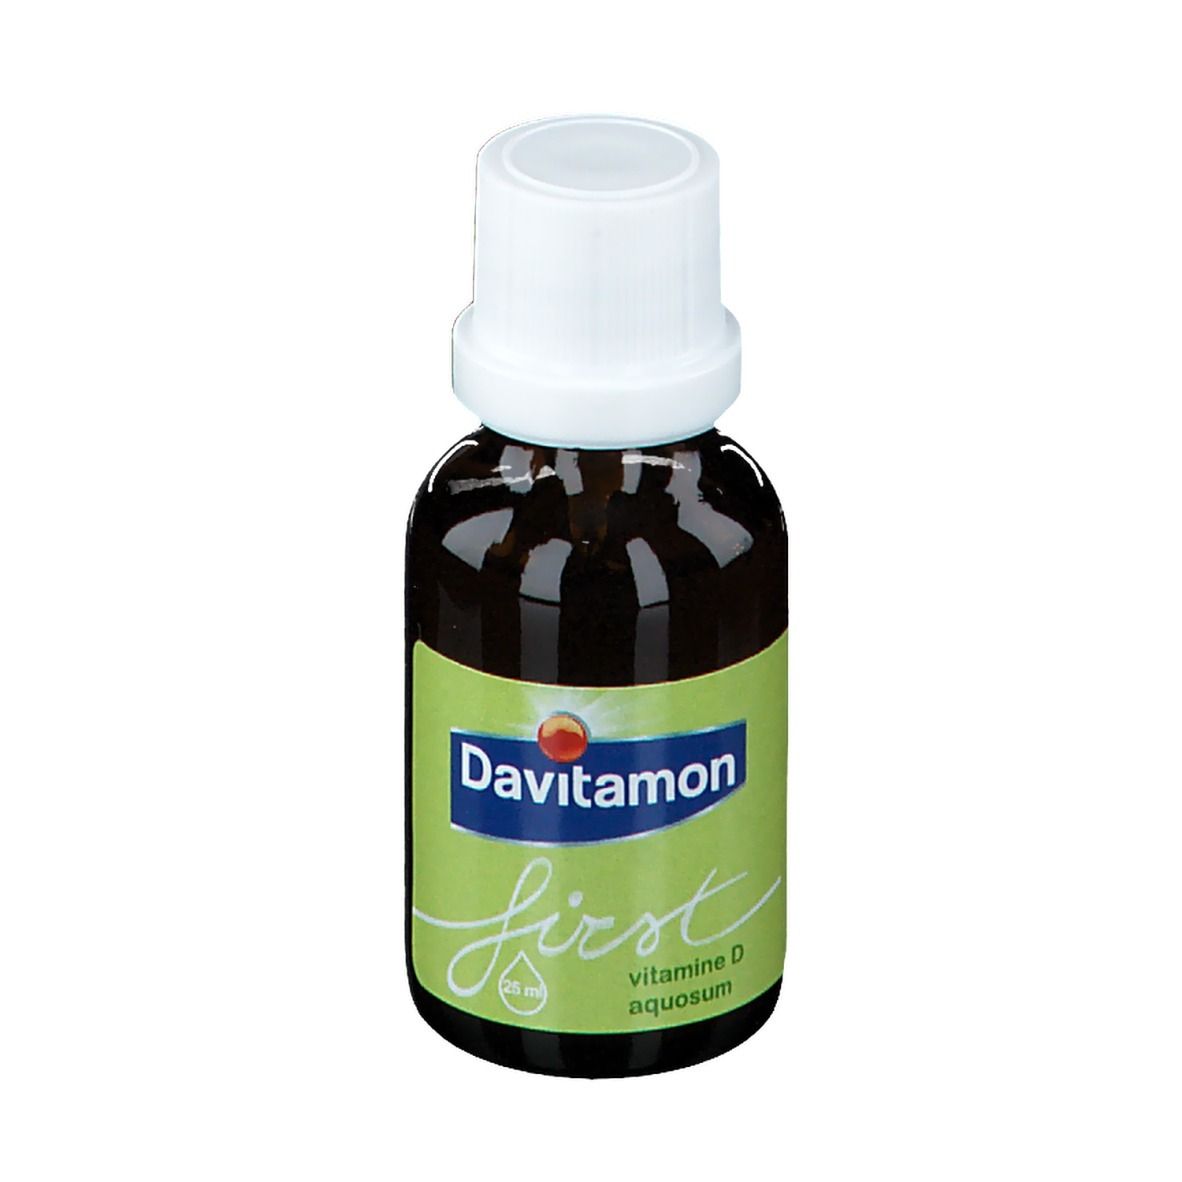 Image of Davitamon first Vitamin D Aquosum